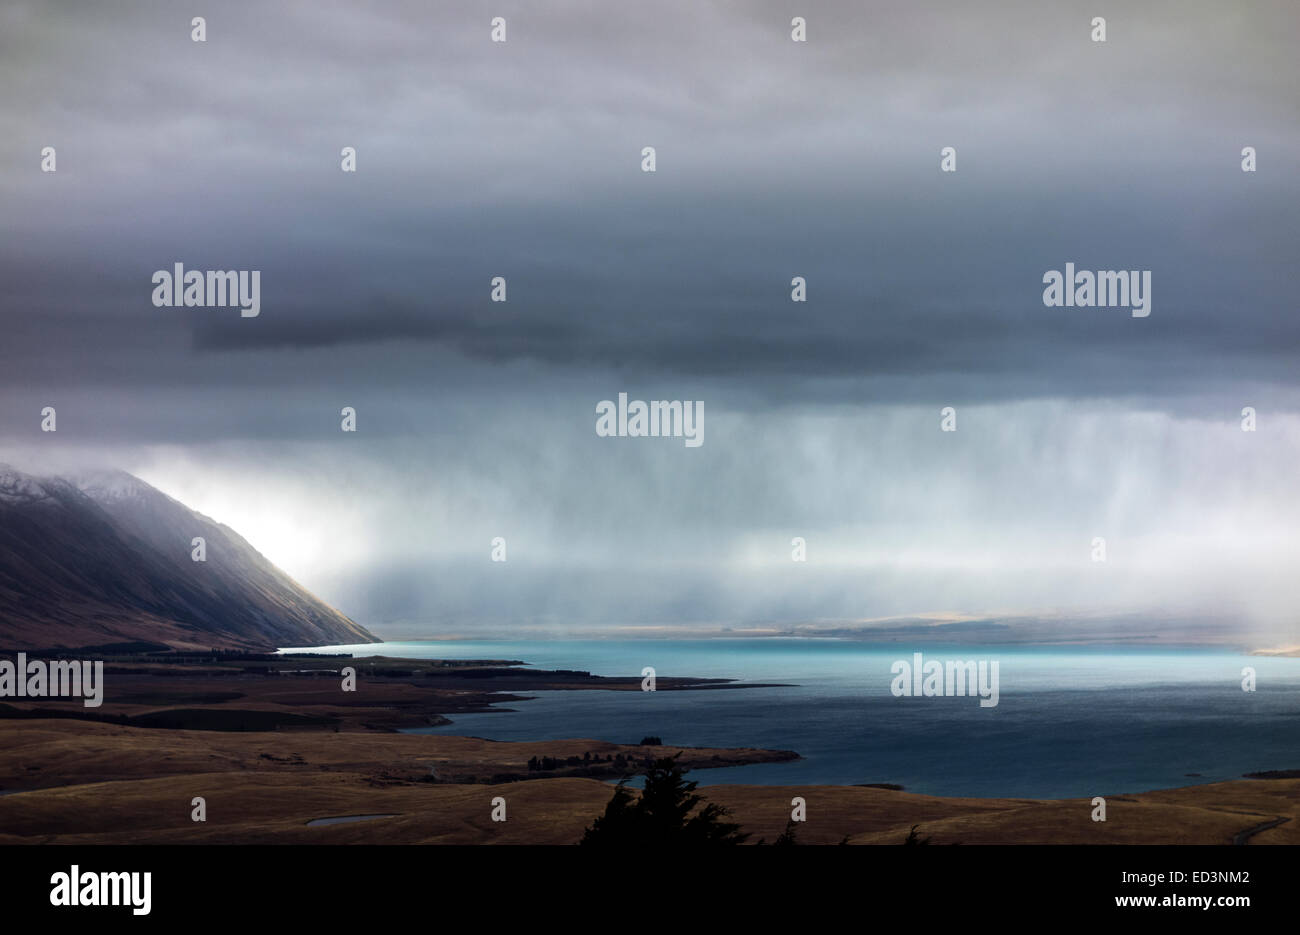 Lake Tekapo Übersicht bei schlechtem Wetter, Sommer Regen Sturm. Panoramablick vom Mount John Universitäts-Sternwarte. Neuseeland. Stockfoto